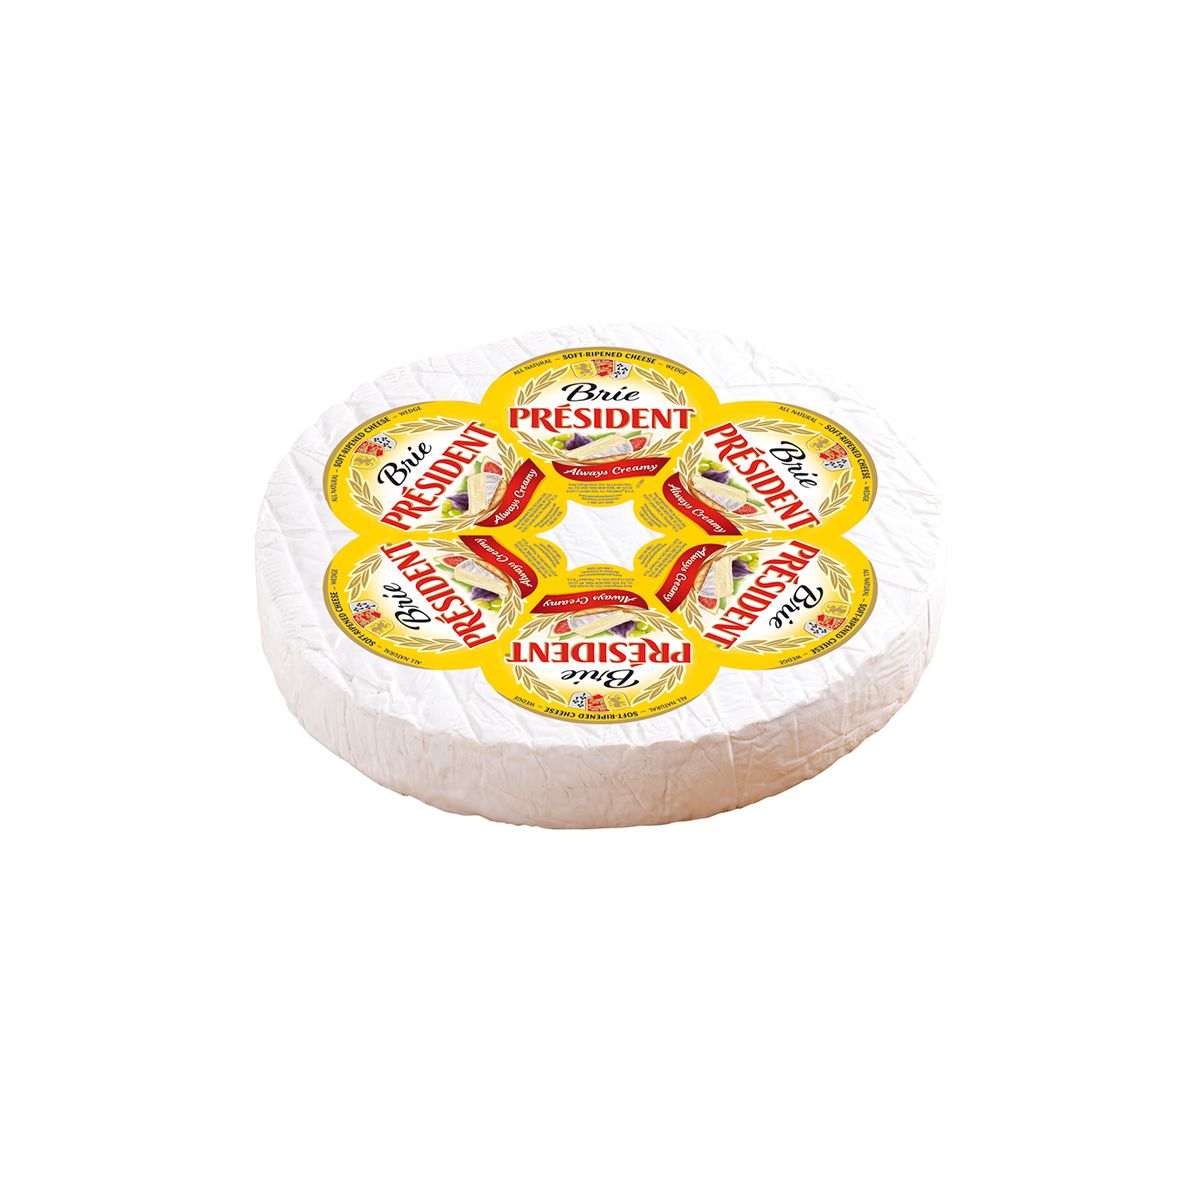 Président Cheese Brie Wheel